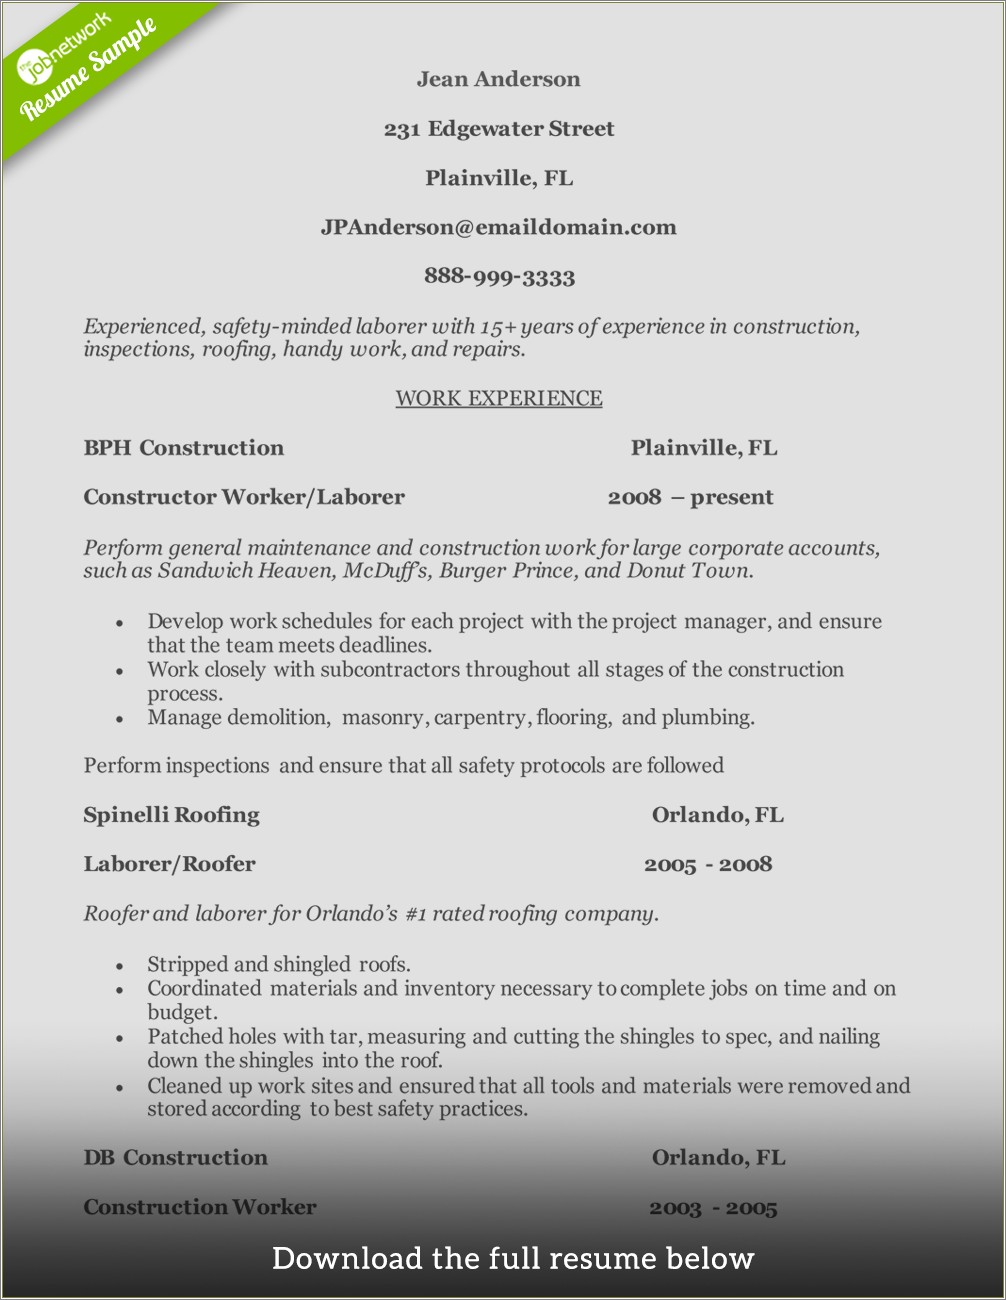 Free Resume For Foreman Construction Job